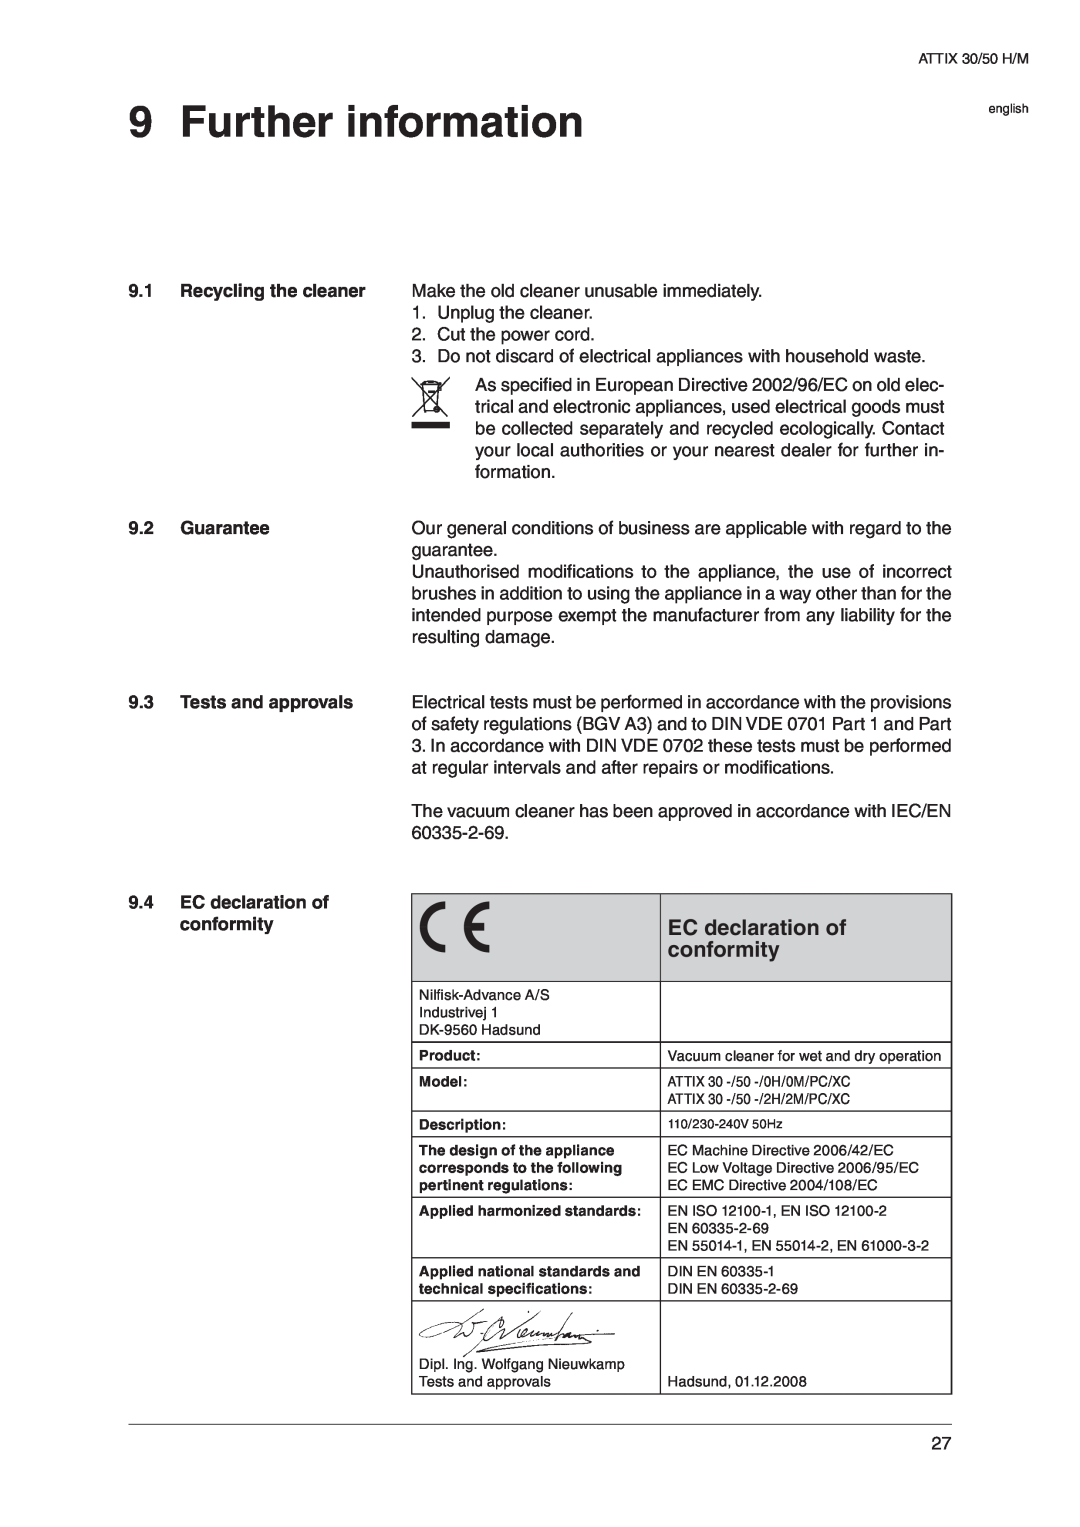 Nilfisk-ALTO 30 H, 30 M operating instructions Further information, Guarantee, 9.4EC declaration of conformity 